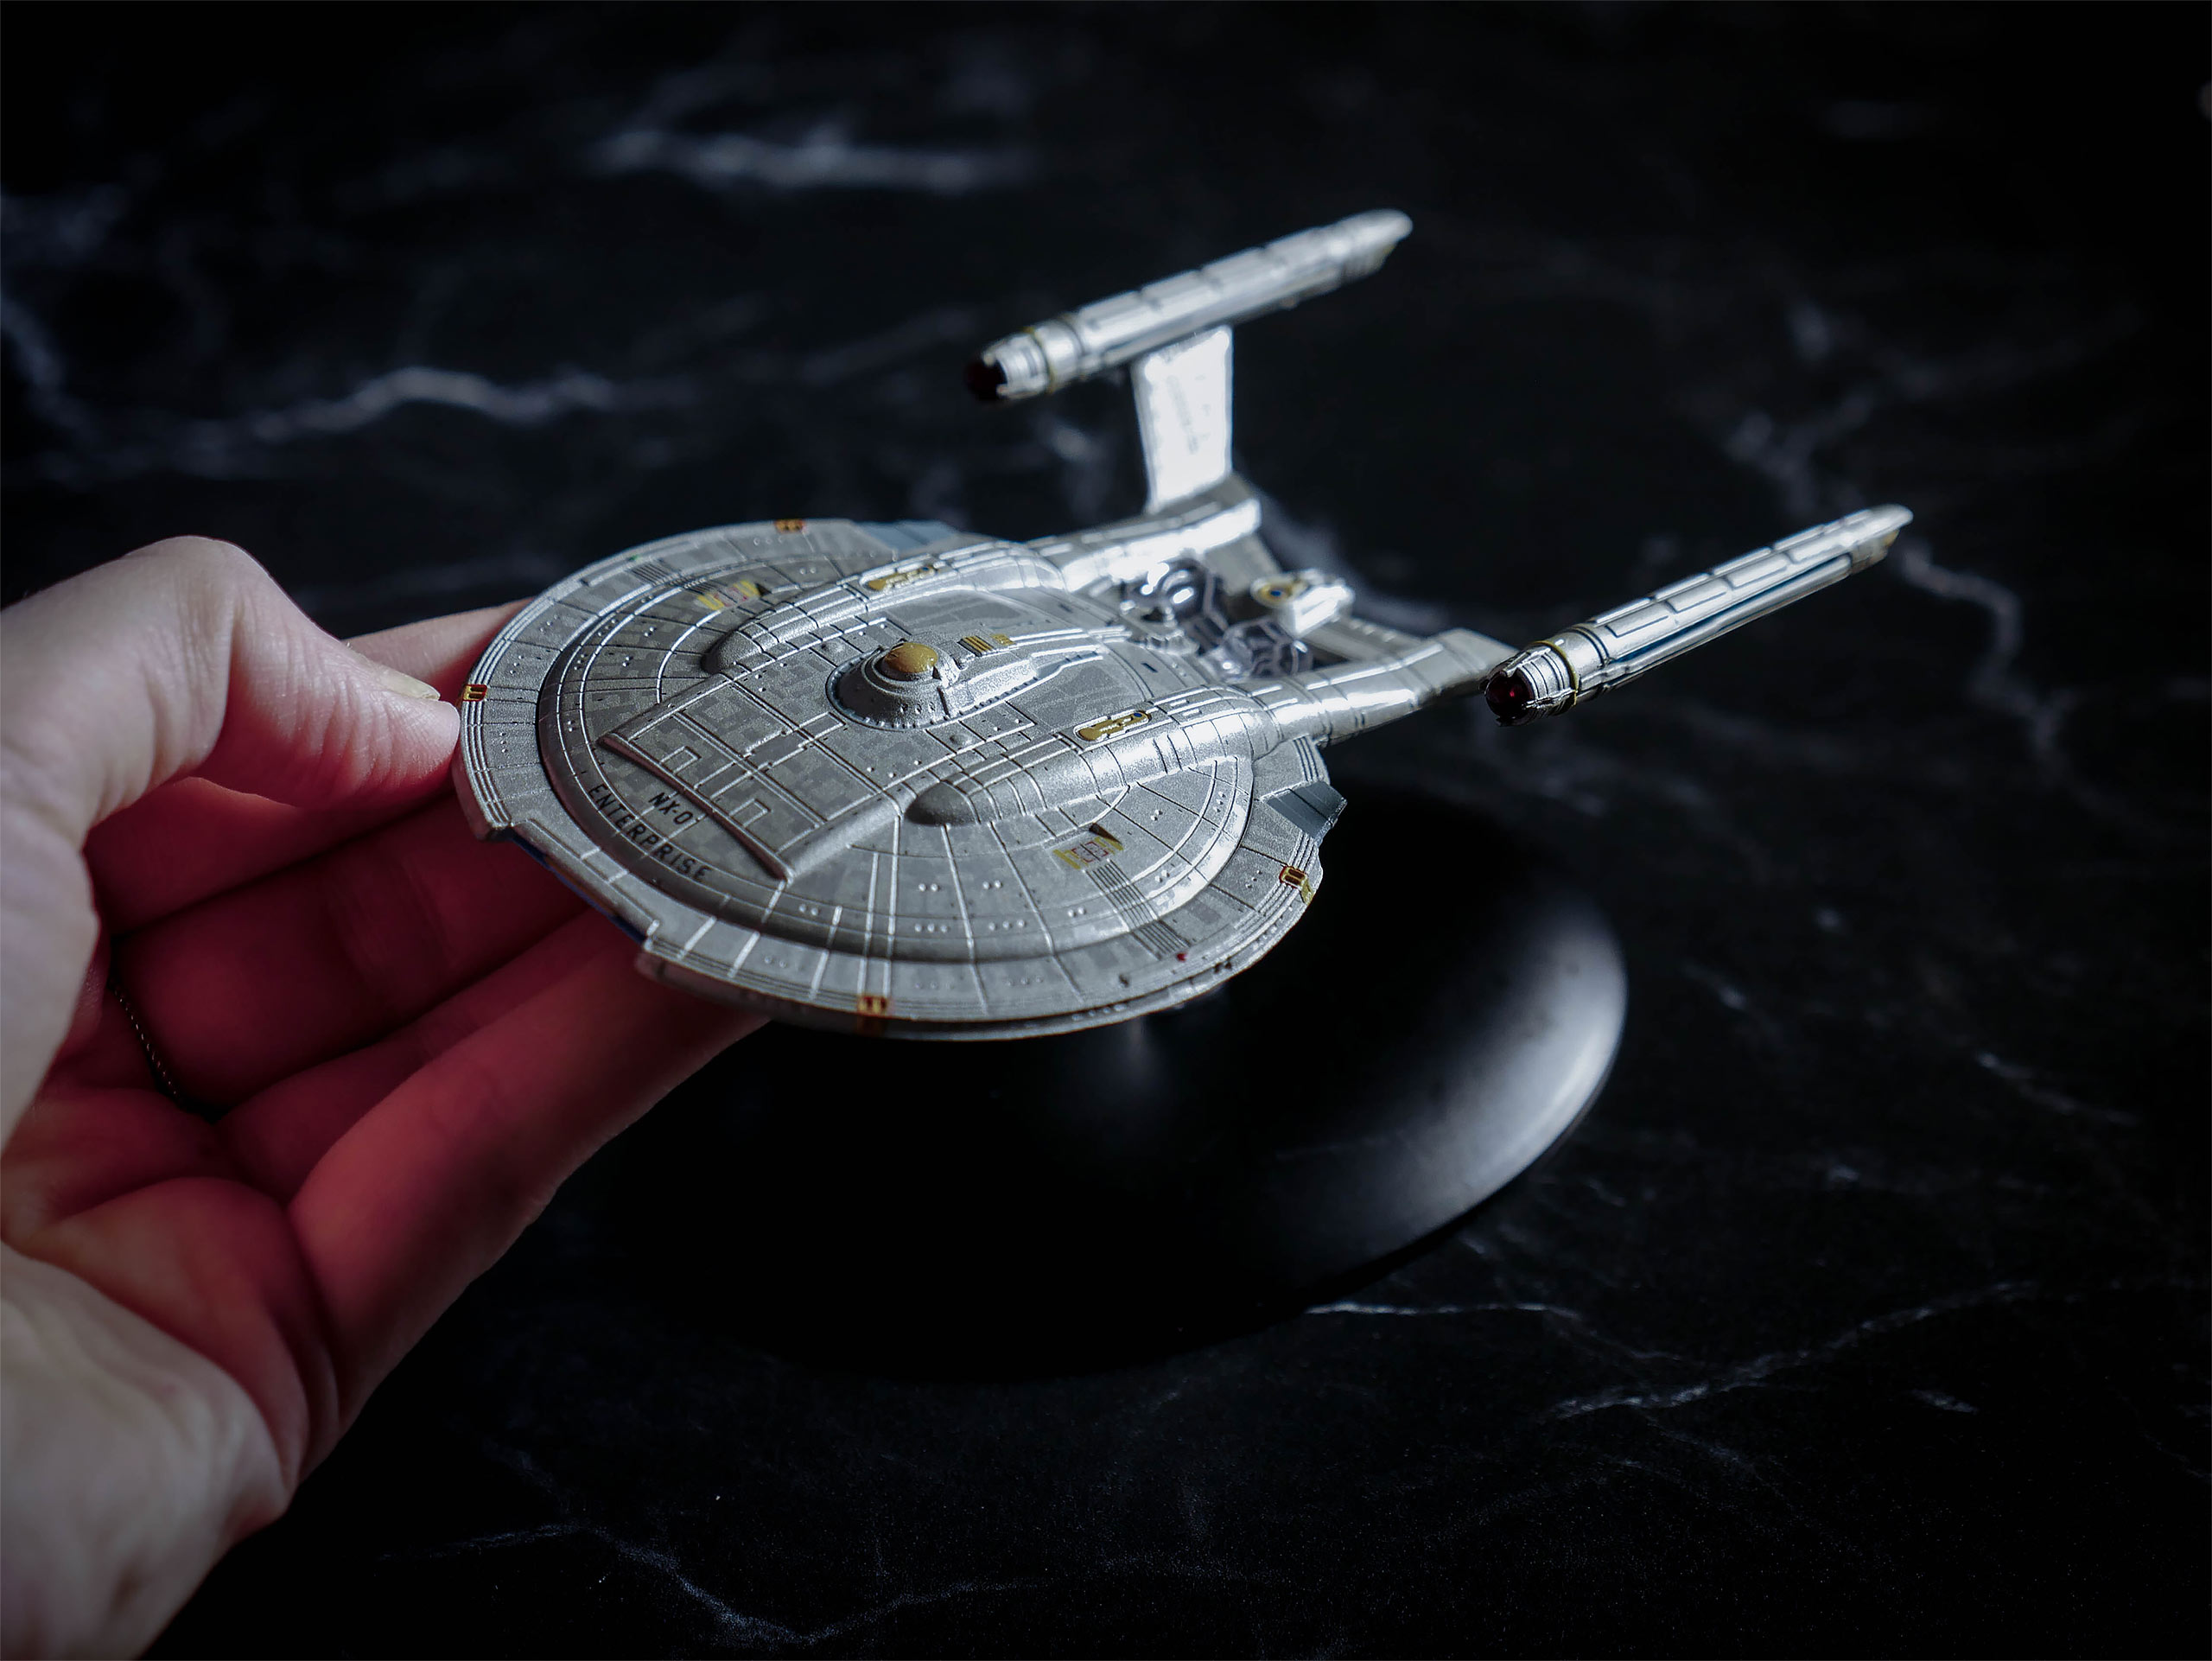 Star Trek - Raumschiff U.S.S. Enterprise NX-01 Hero Collector Figur